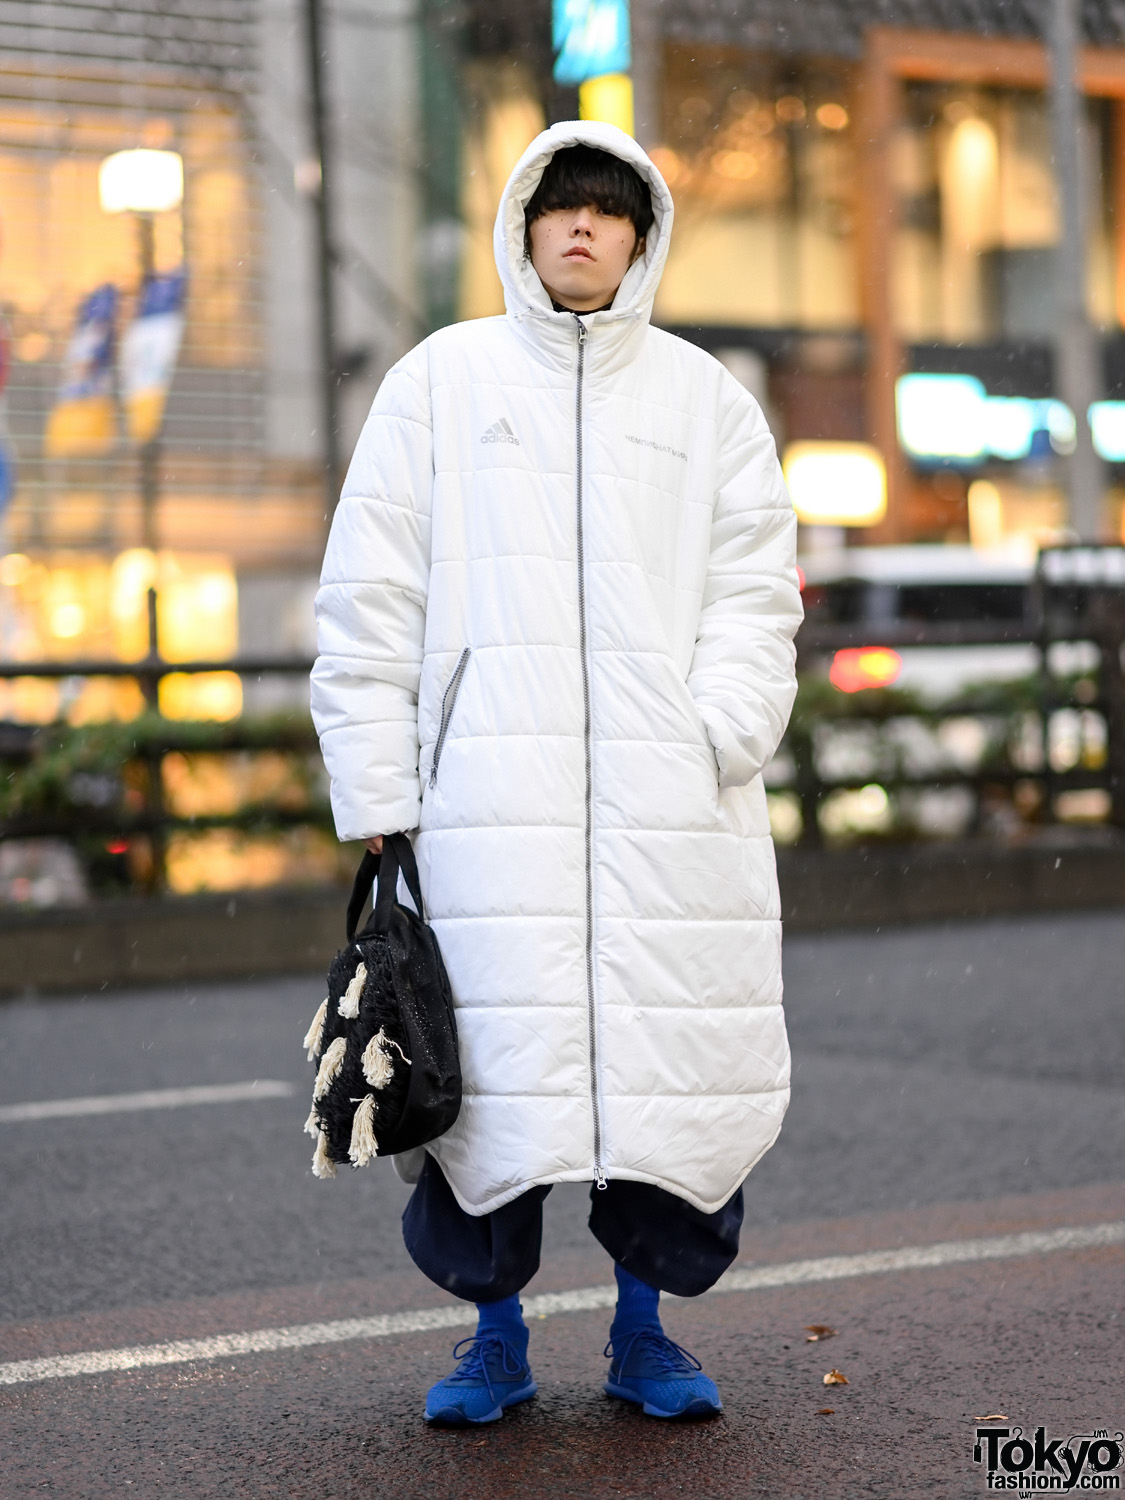 Harajuku Street Style w/ Gosha Rubchinskiy x Adidas Hooded Puffer